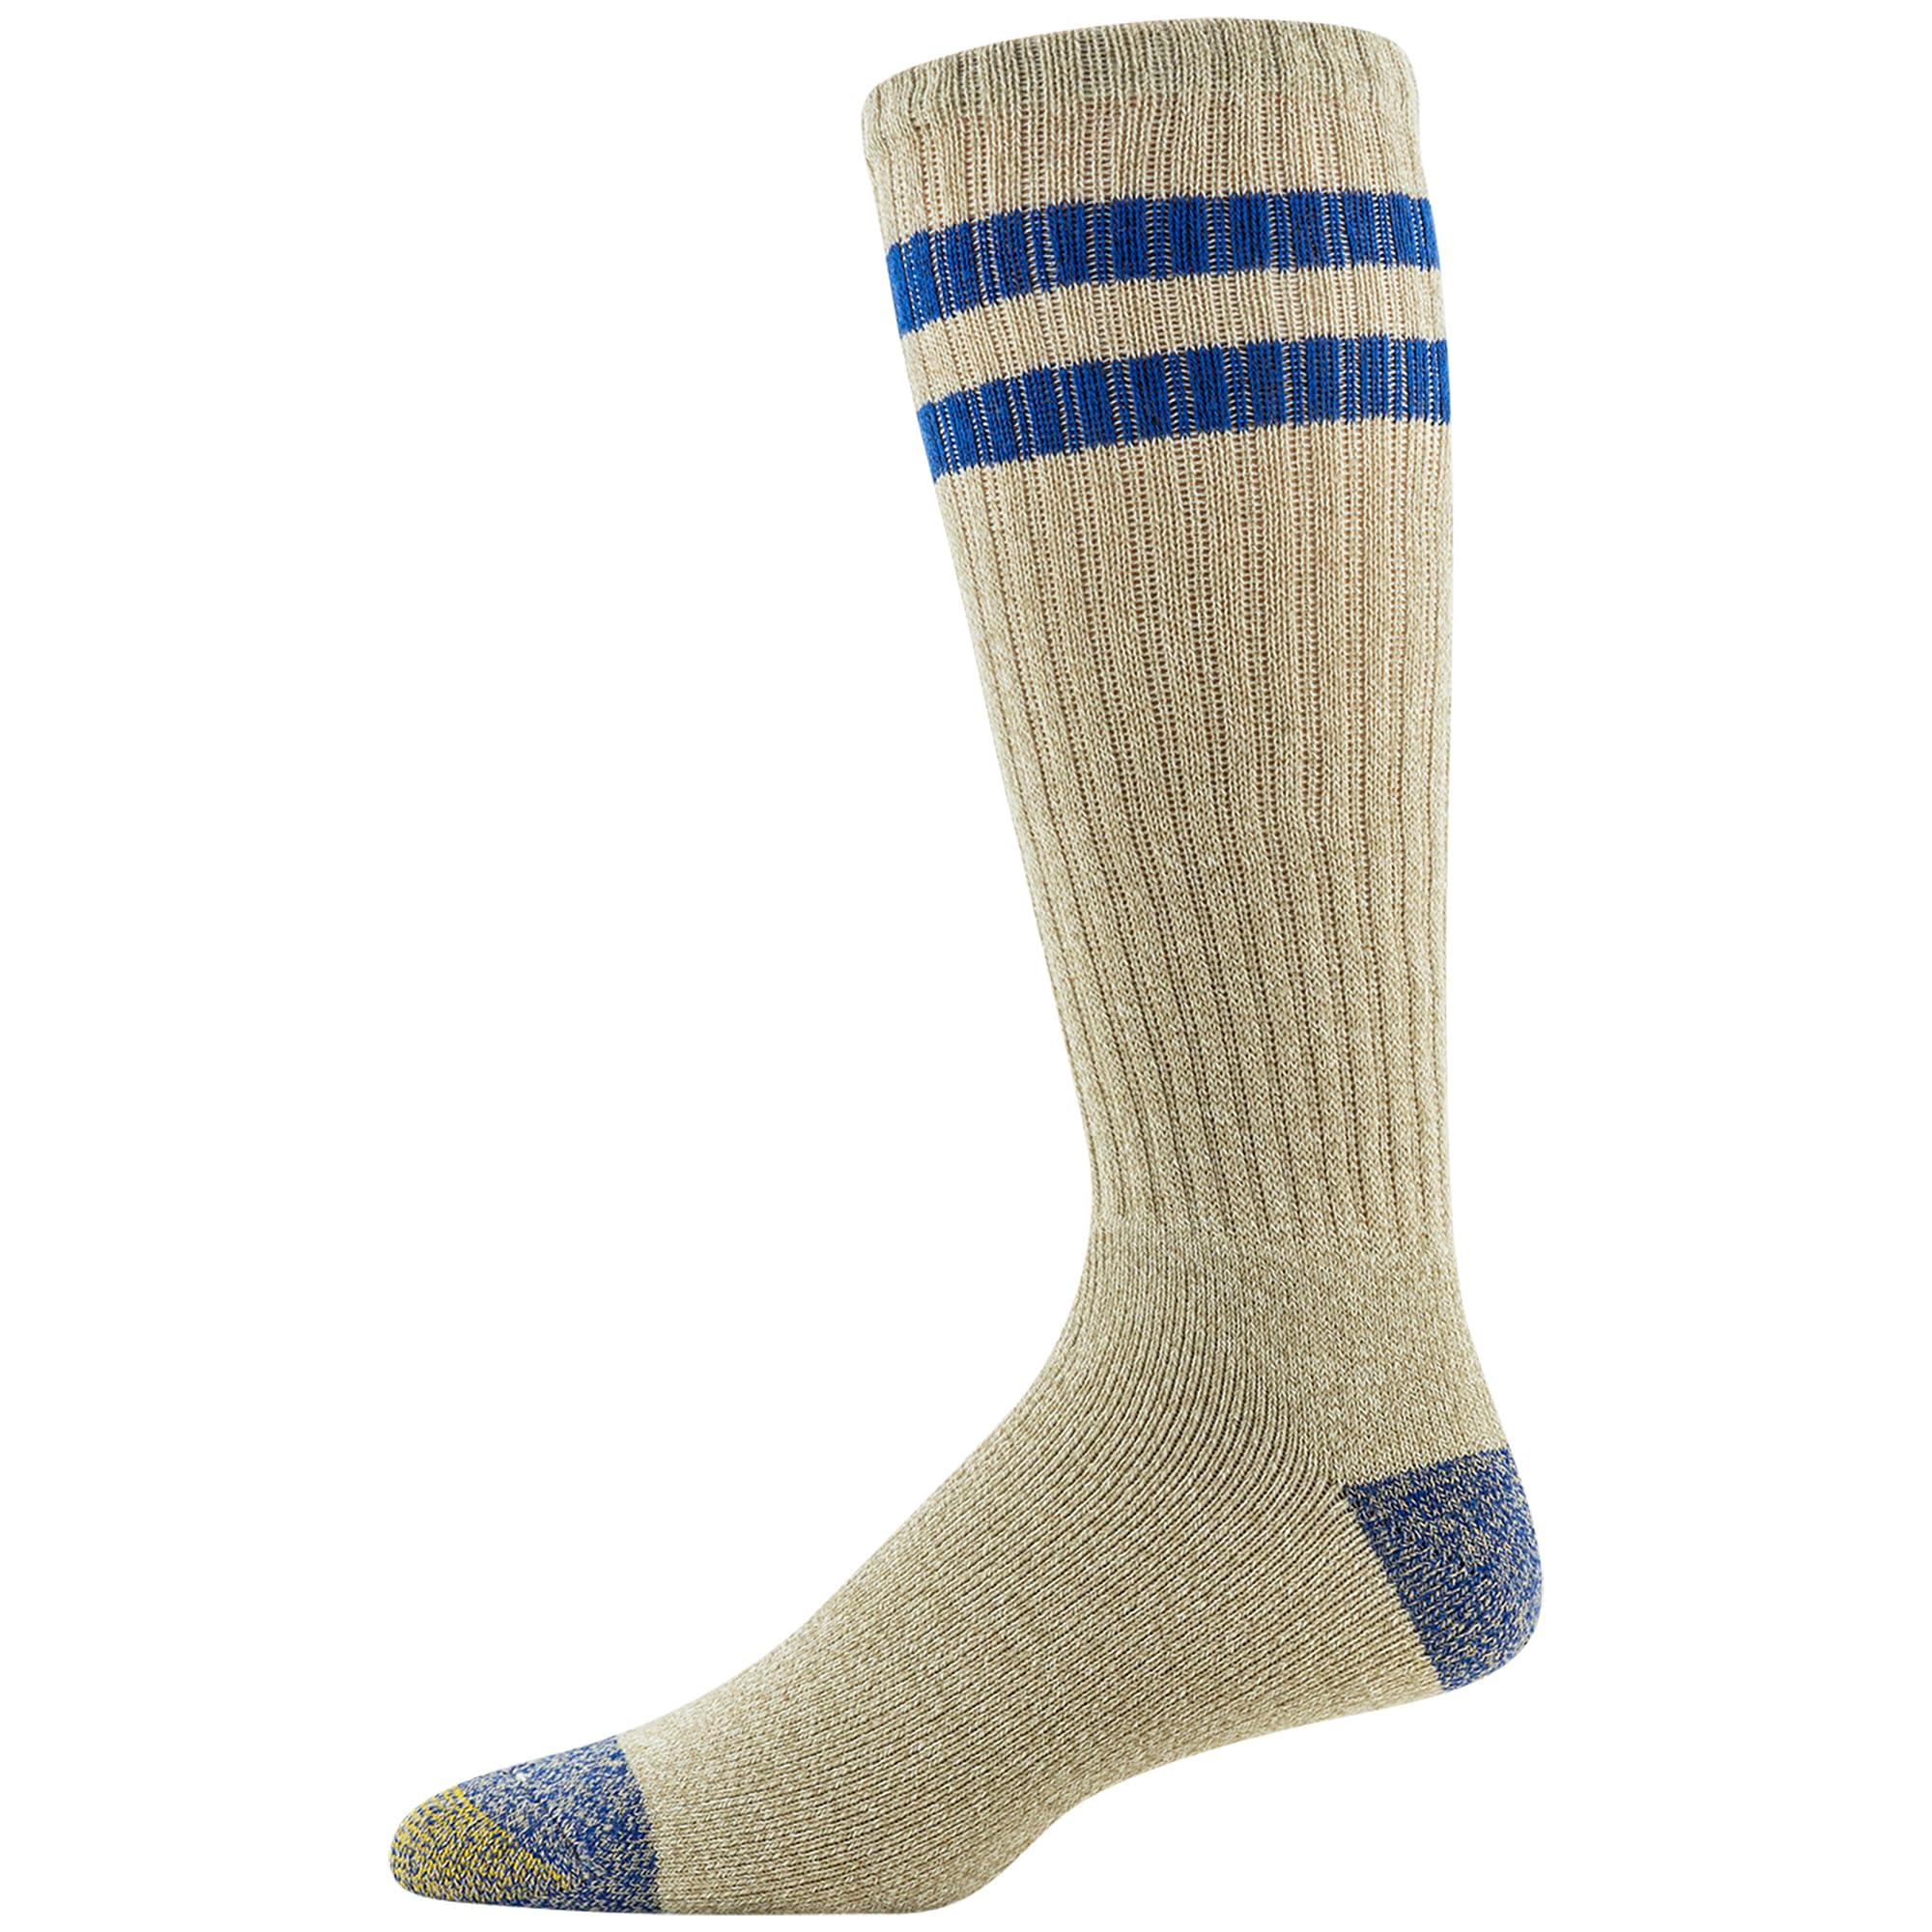 GOLDTOE Men's Harrington Crew Socks, Multipairs, Retro Stripe Oatmeal Assorted (6-Pairs), Shoe Size: 6-12.5